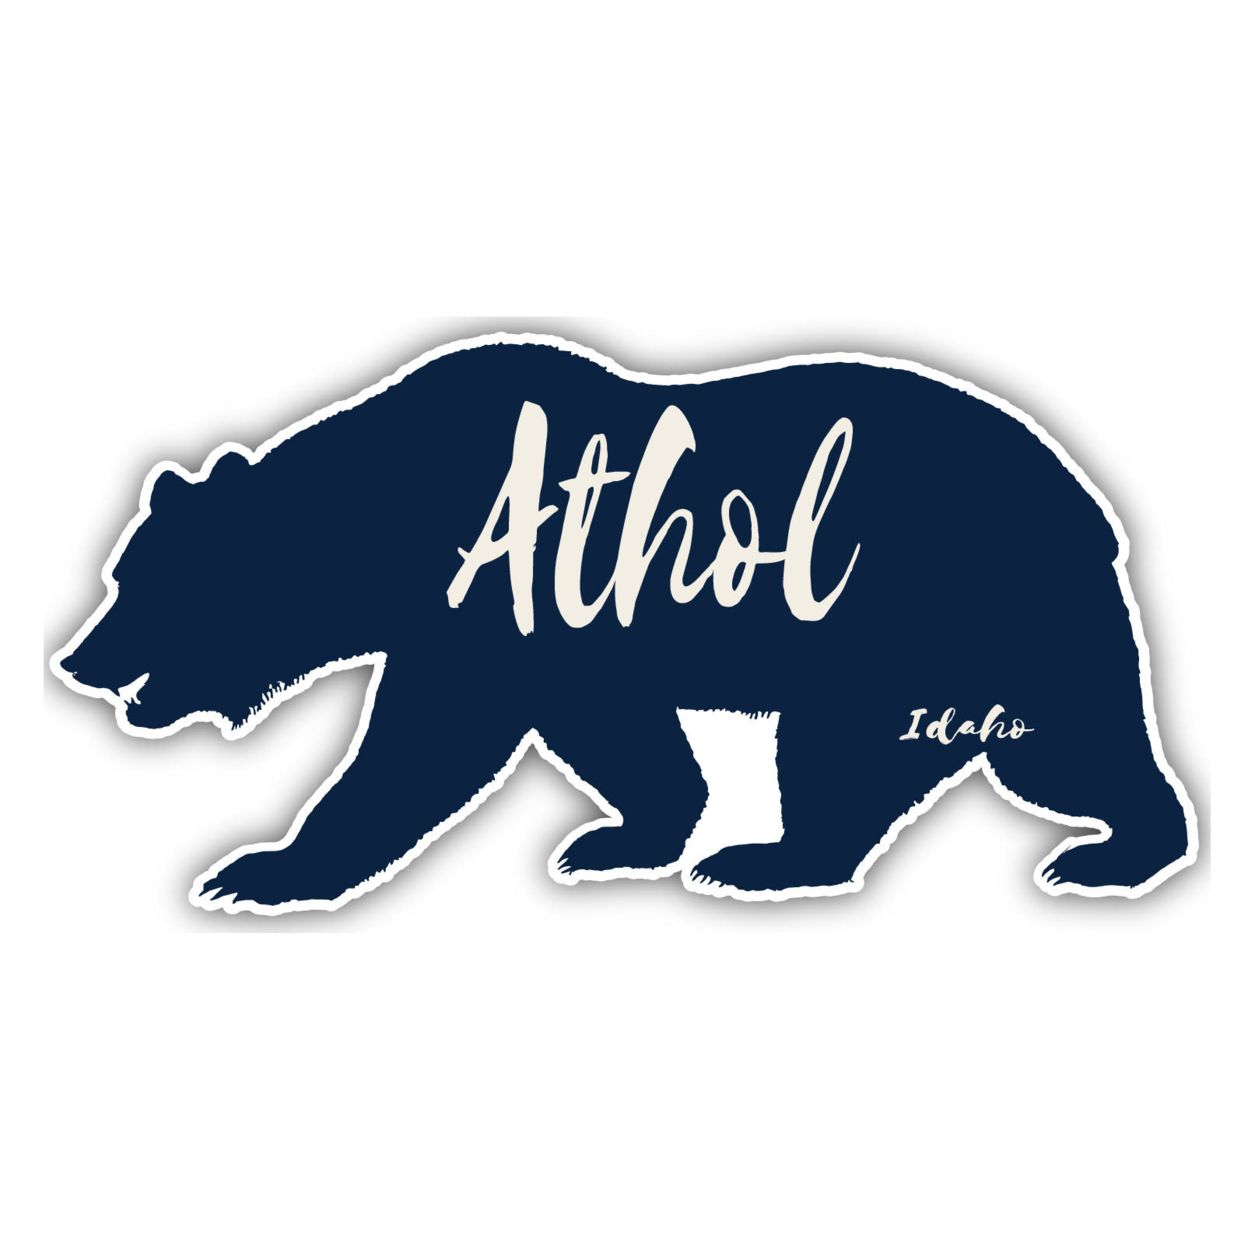 Athol Idaho Souvenir Decorative Stickers (Choose Theme And Size) - Single Unit, 12-Inch, Bear